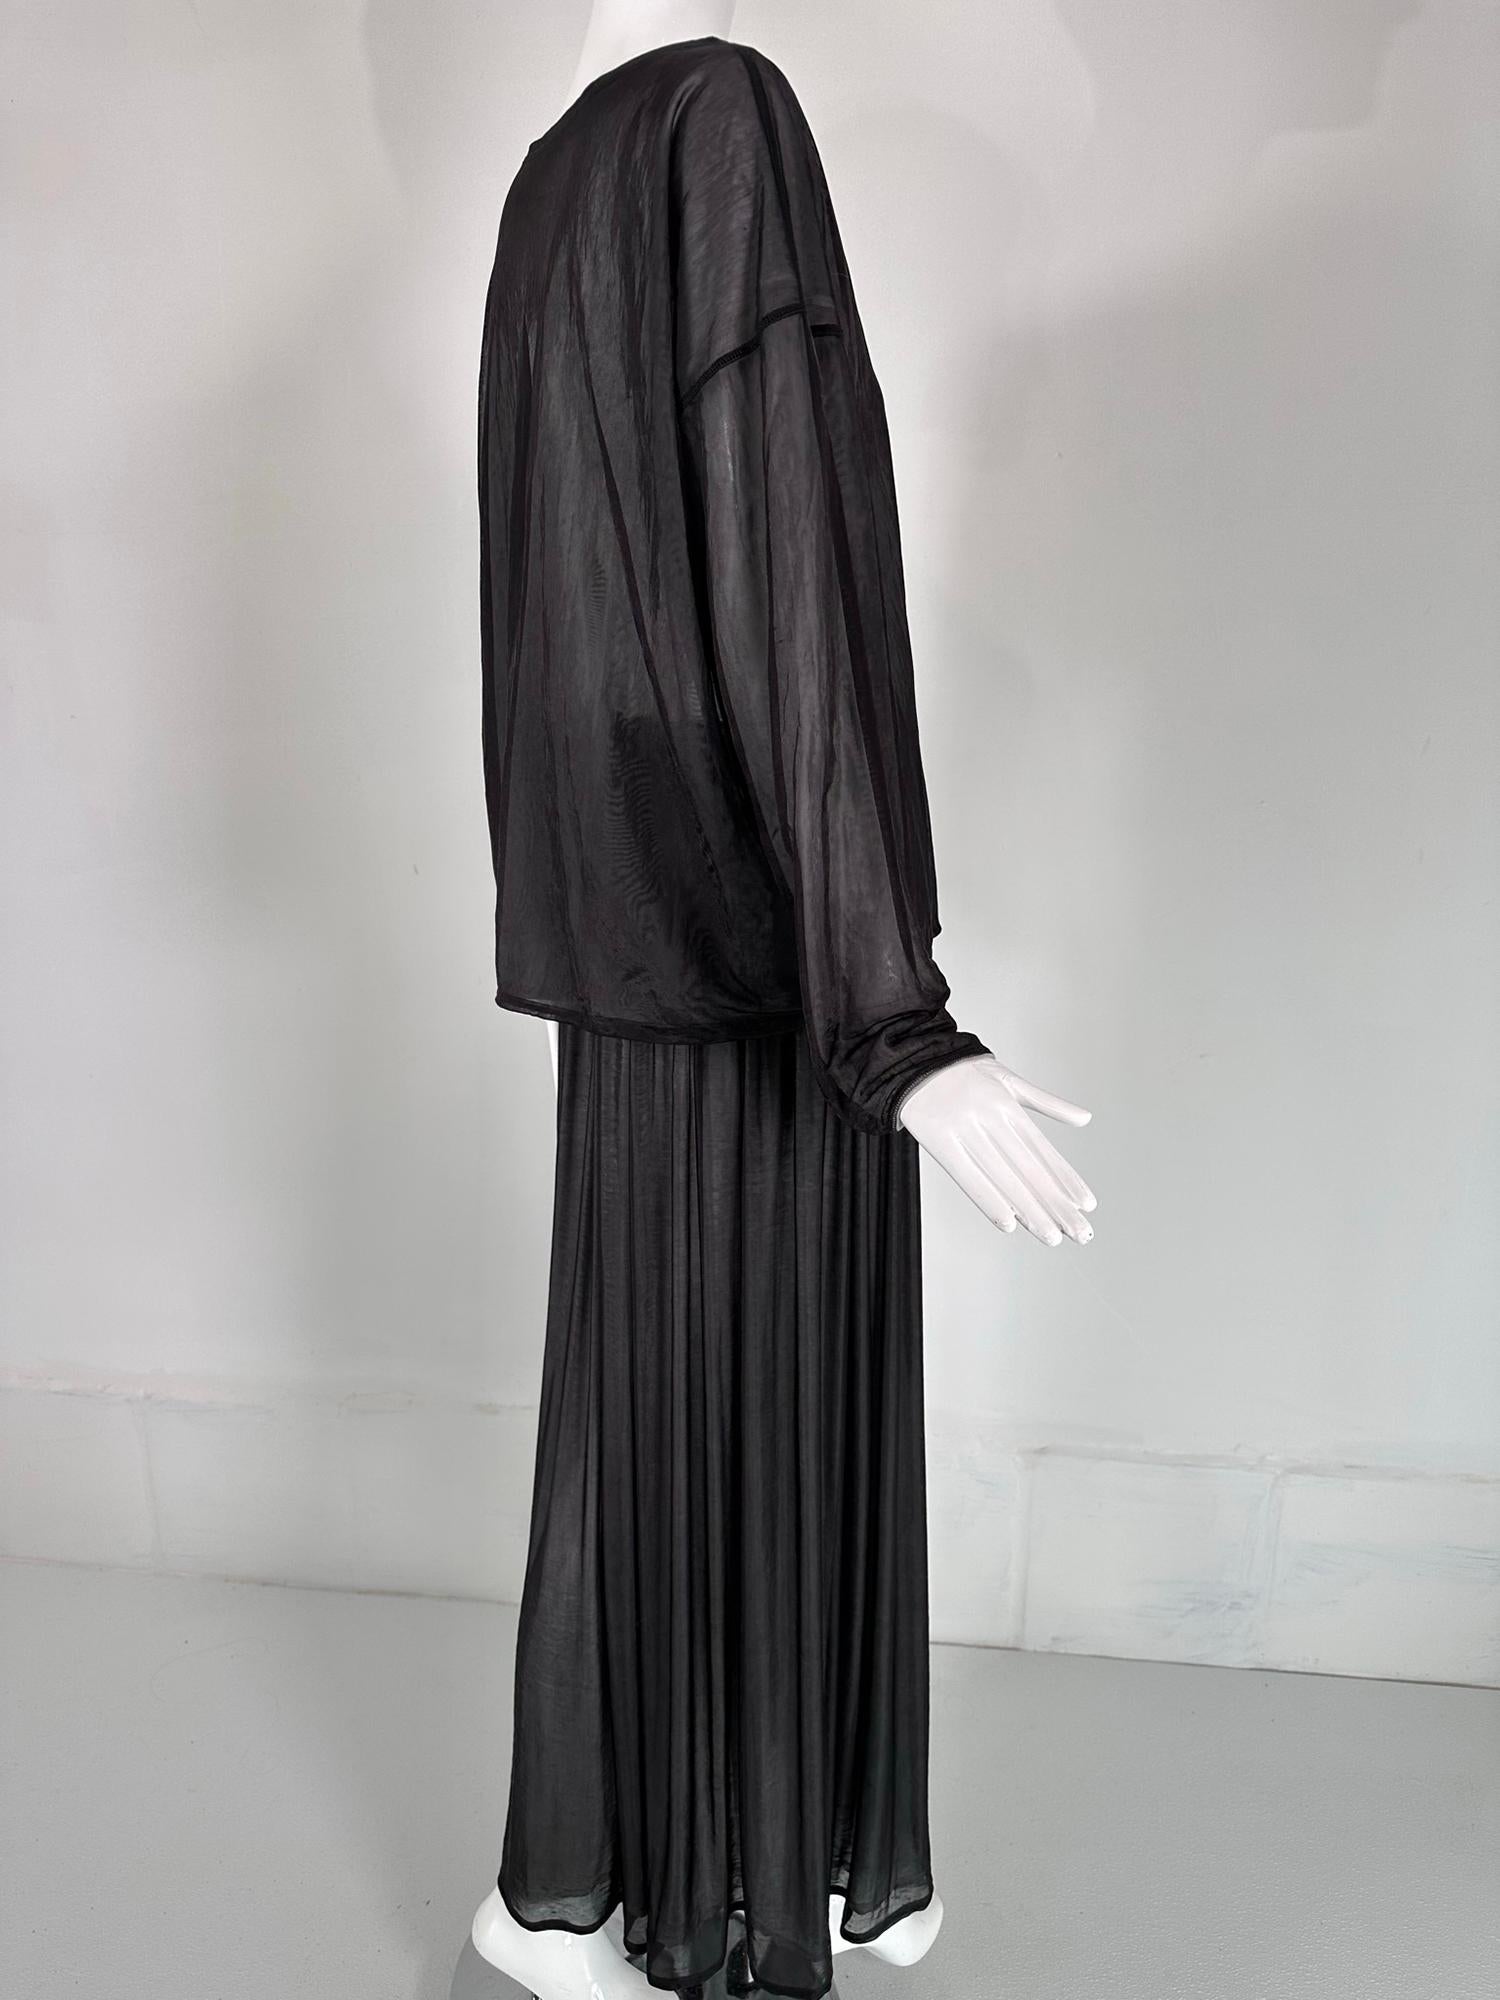 Dolce & Gabbana Sheer Black & White Nylon Athleisure Over size Top & Maxi Skirt  For Sale 1